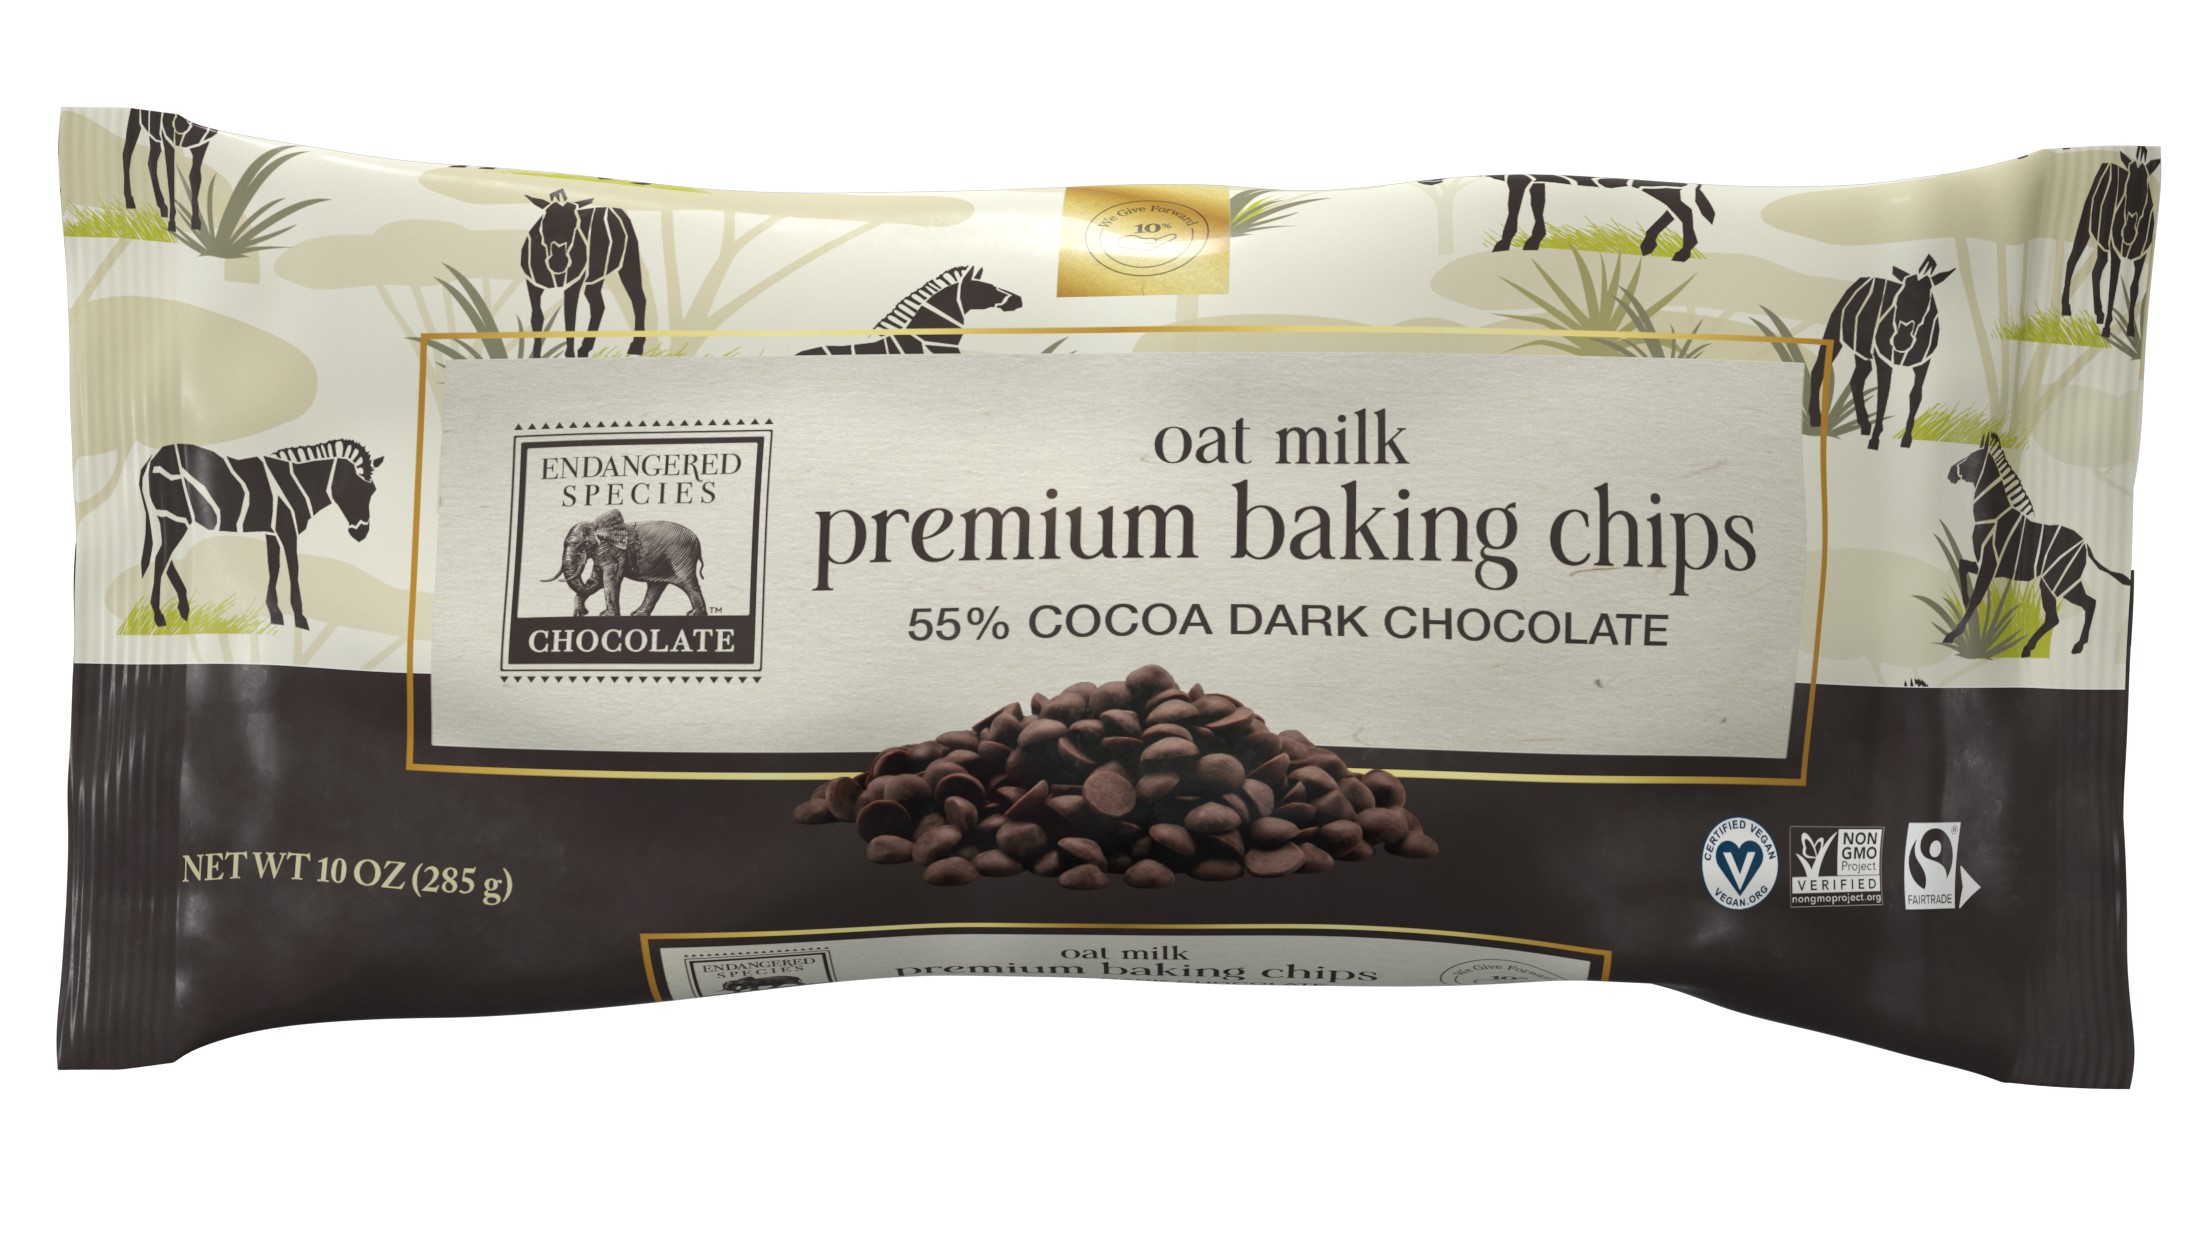 Endangered Species 10oz Chocolate Premium Oat Milk Baking Chips, 55% Cocoa - image 1 of 7